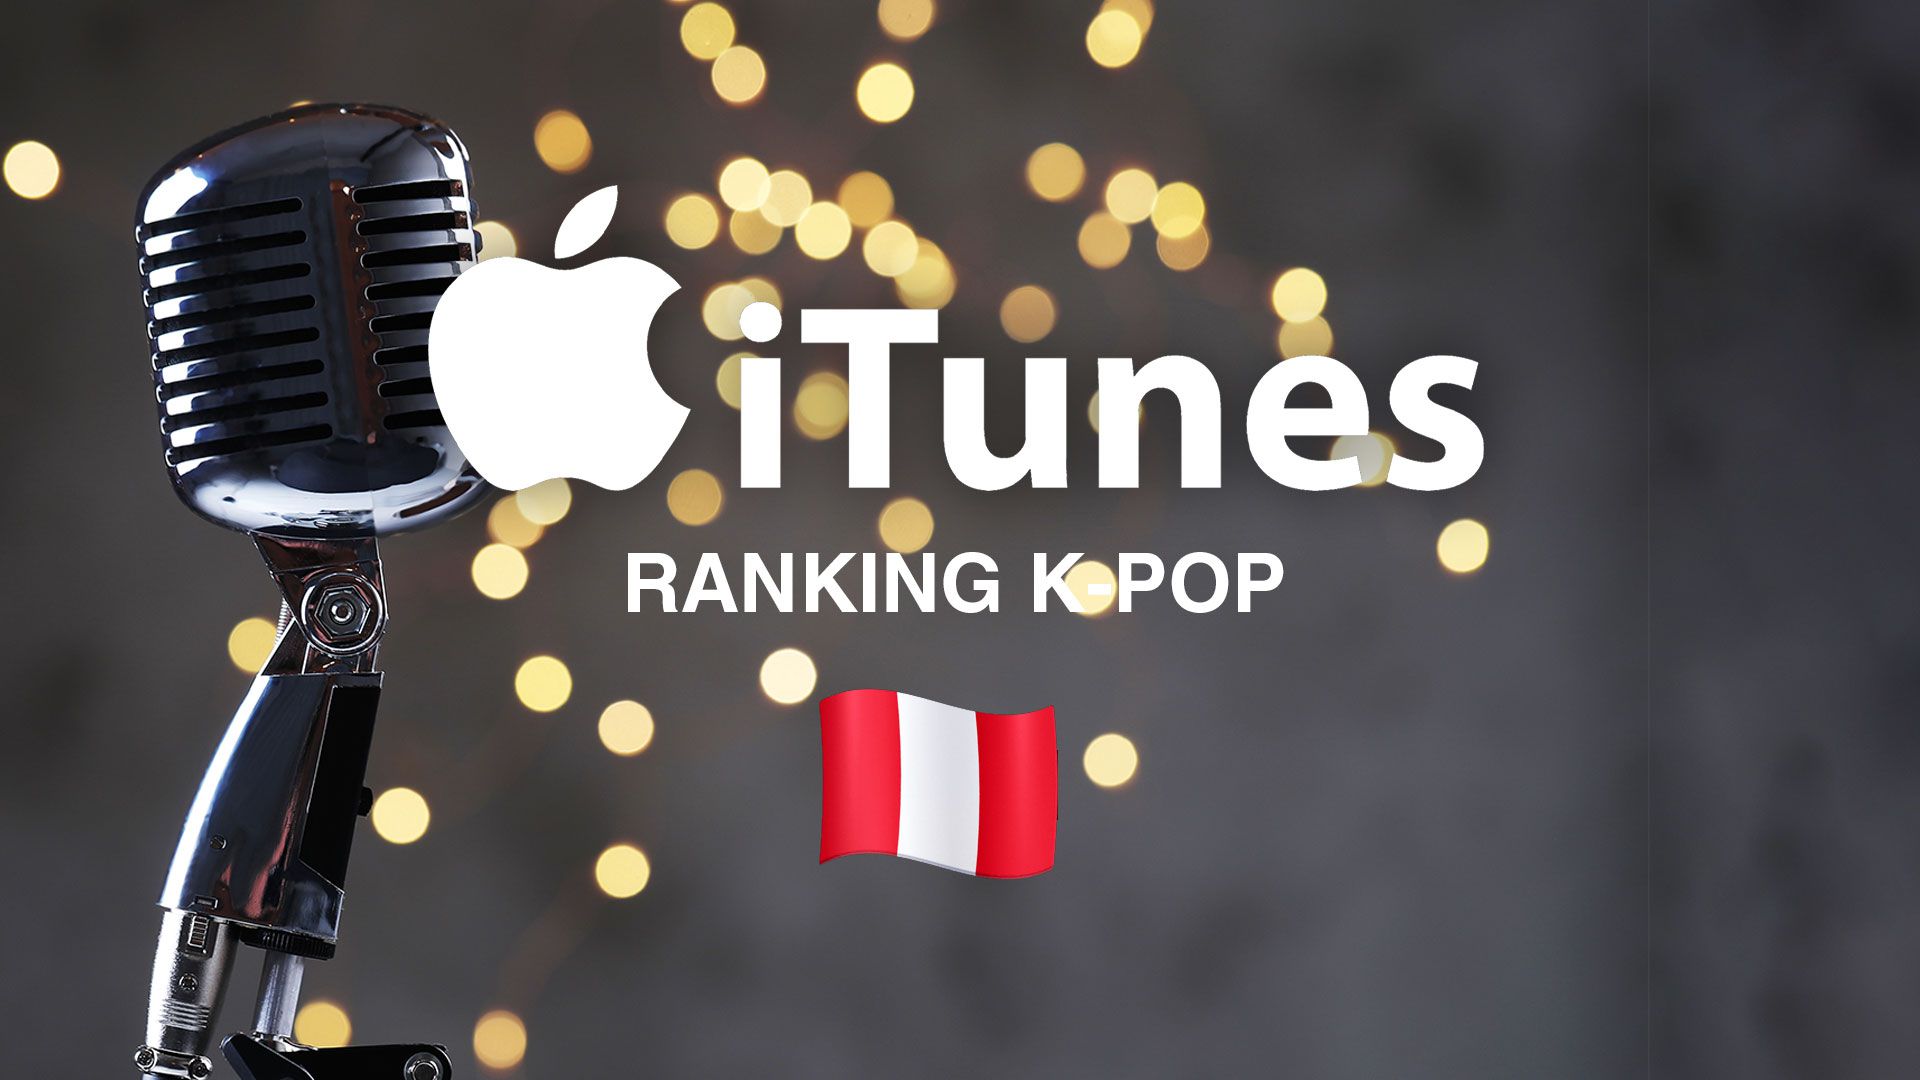 Canciones de K-pop en iTunes Perú para reproducir hoy